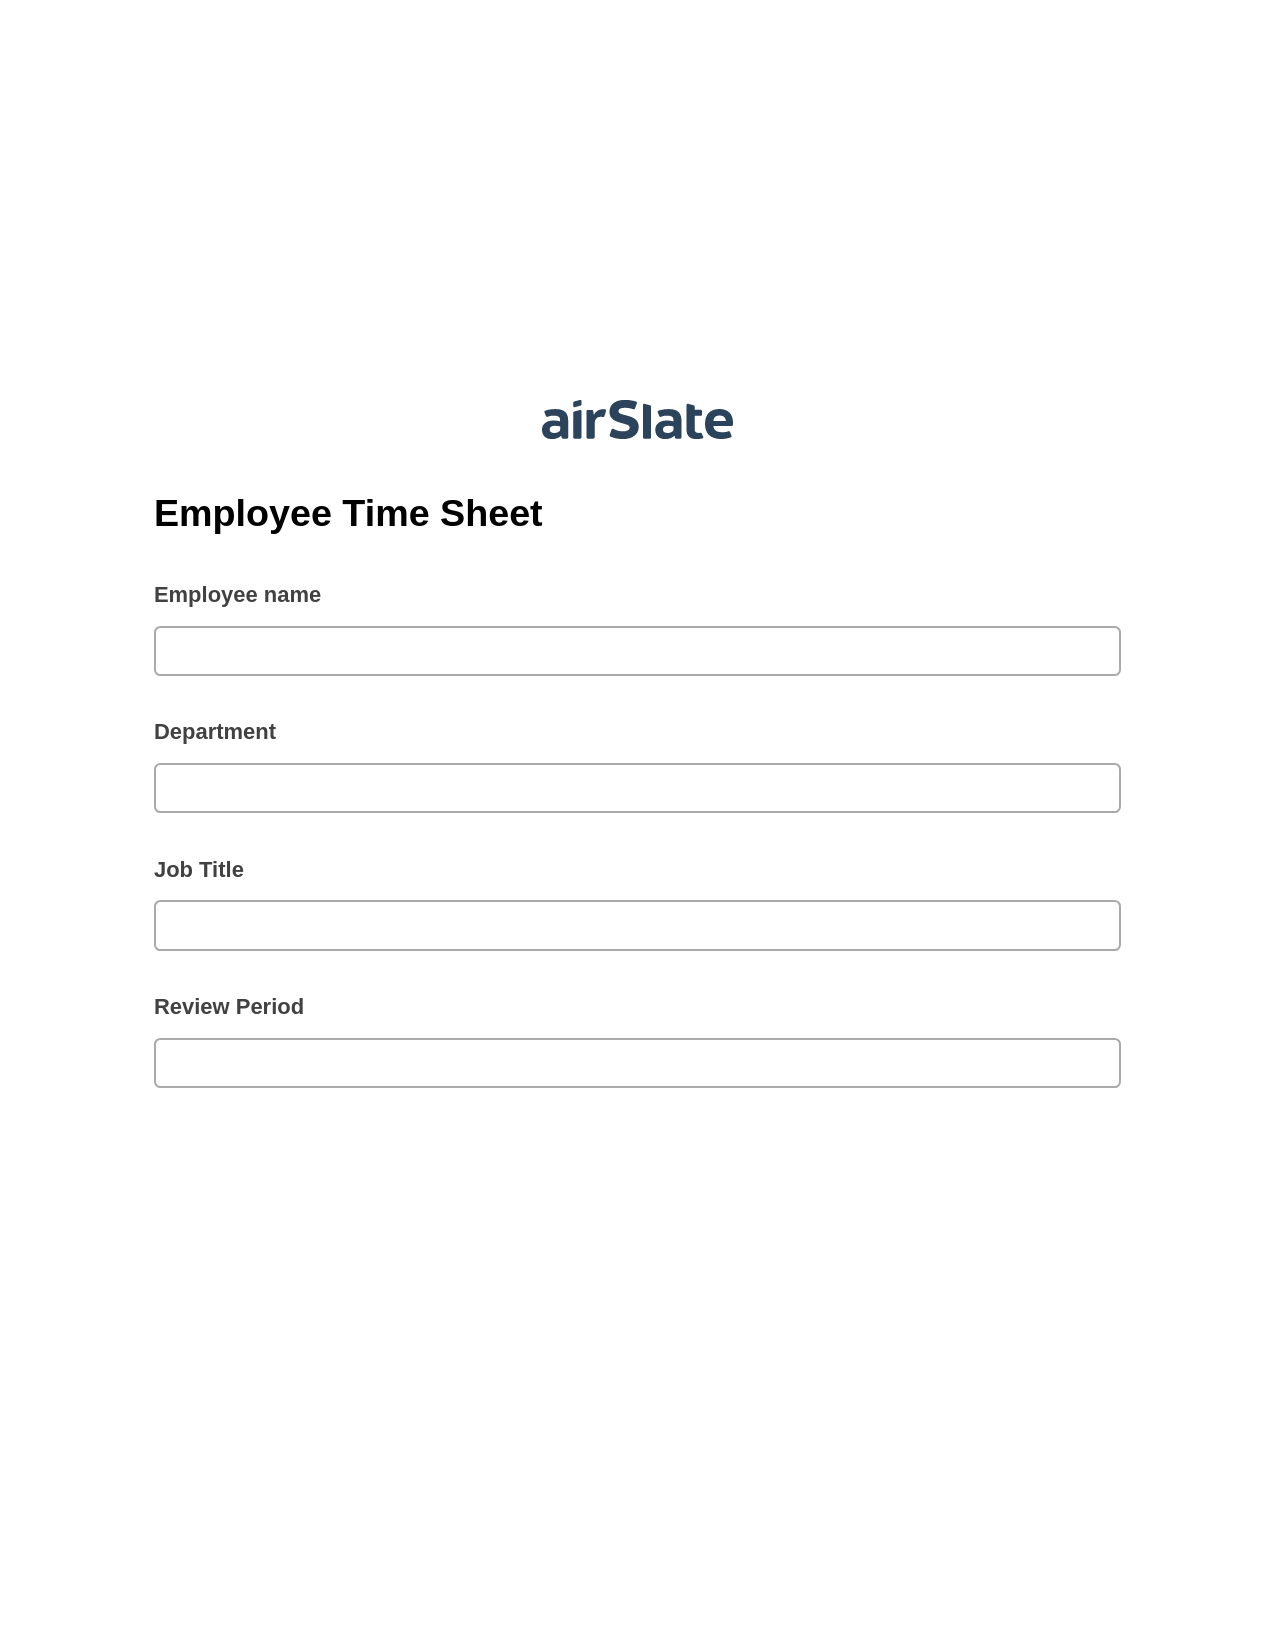 Multirole Employee Time Sheet Pre-fill Dropdowns from Google Sheet Bot, Create slate addon, Archive to Dropbox Bot